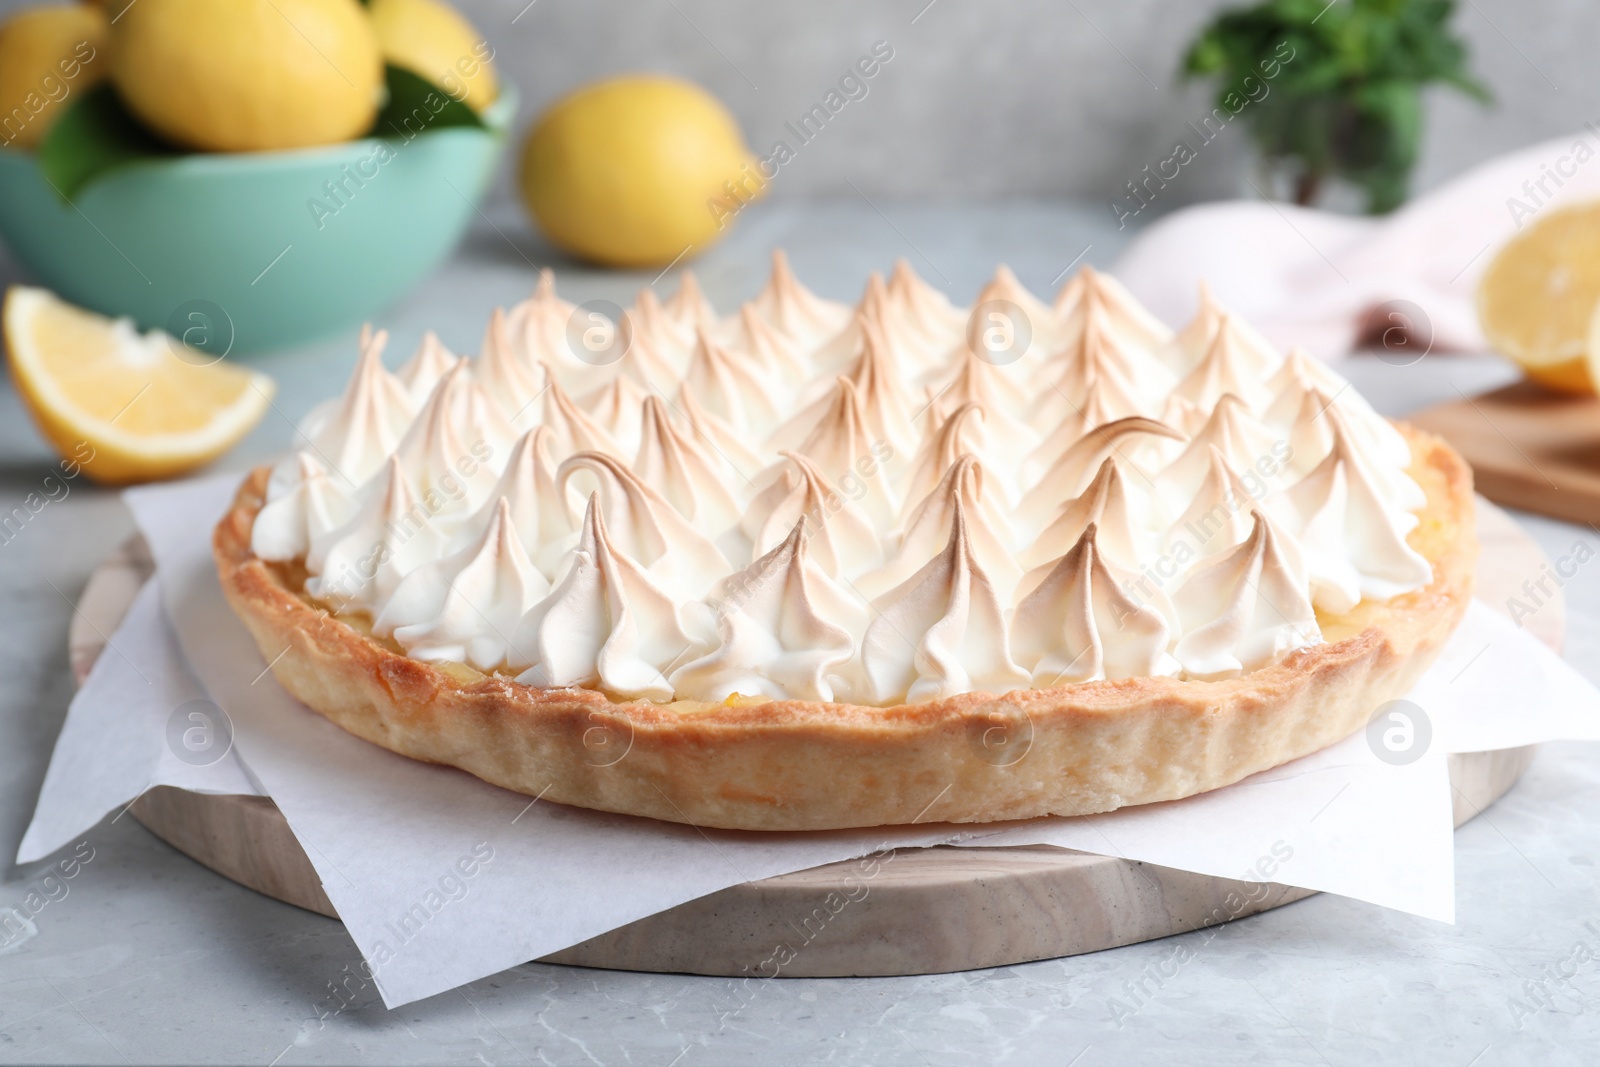 Photo of Delicious lemon meringue pie on grey table